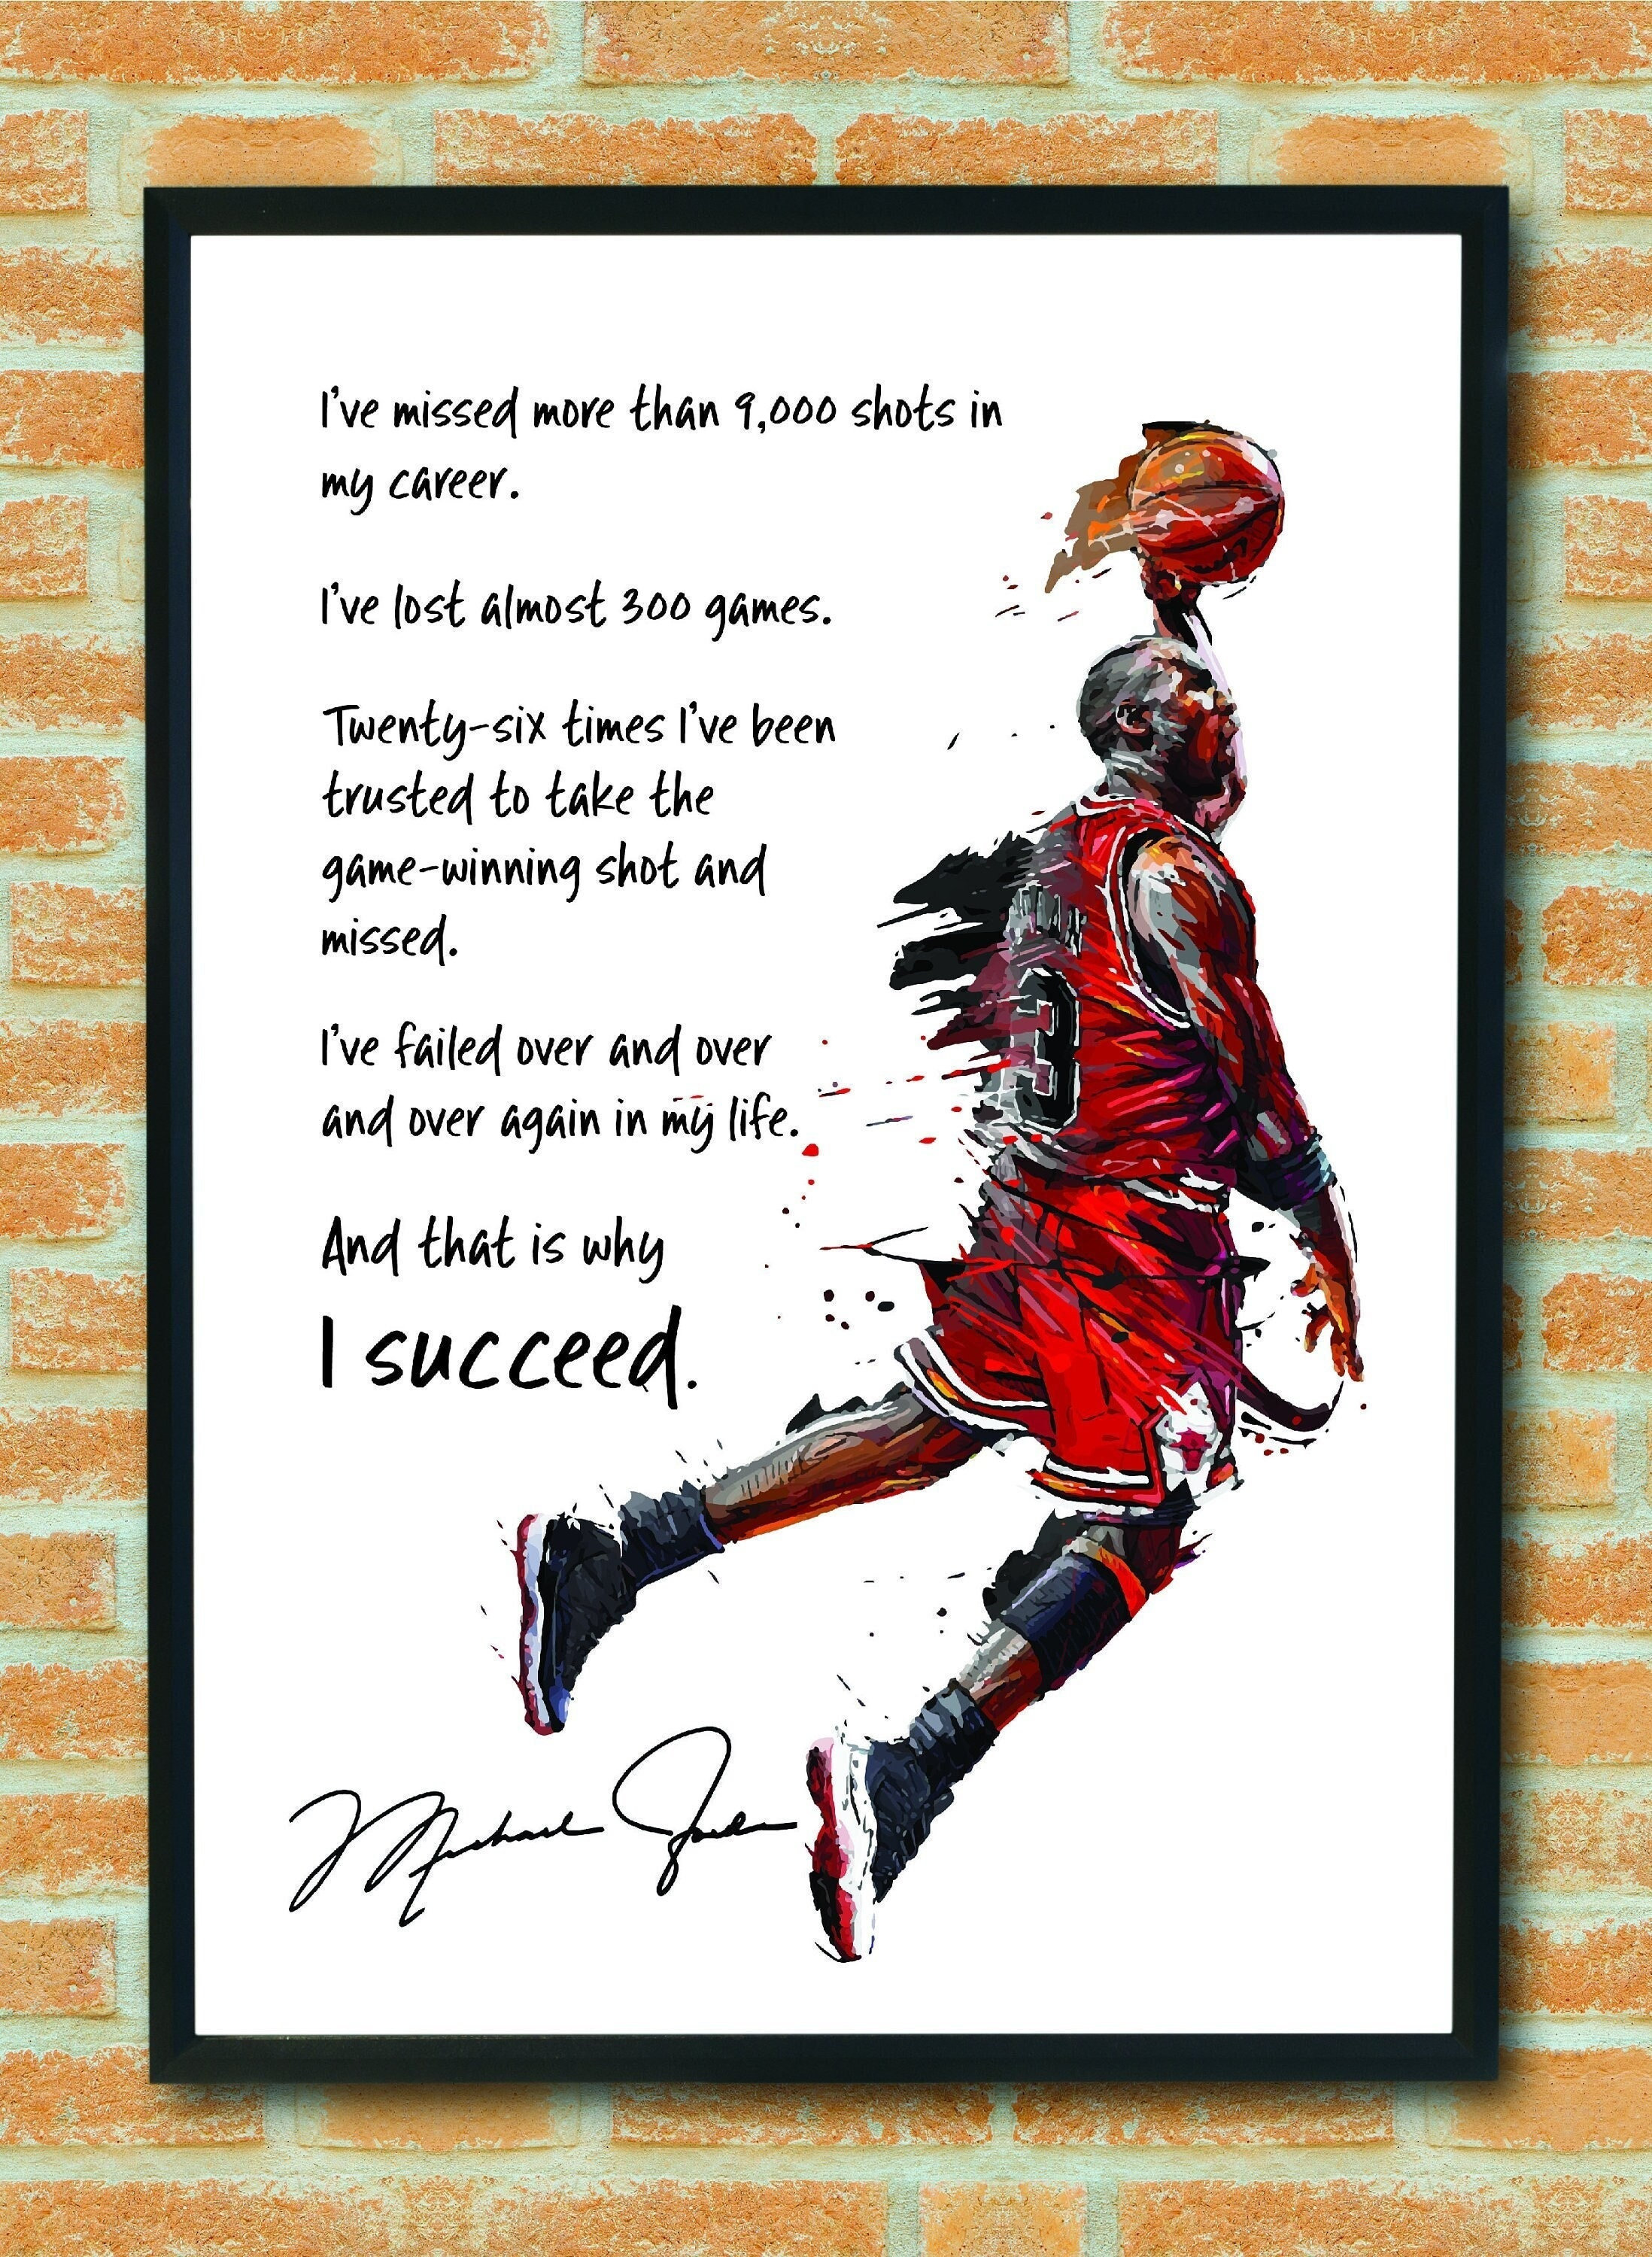 Michael Jordan Shooting Over Another Player Wood Print